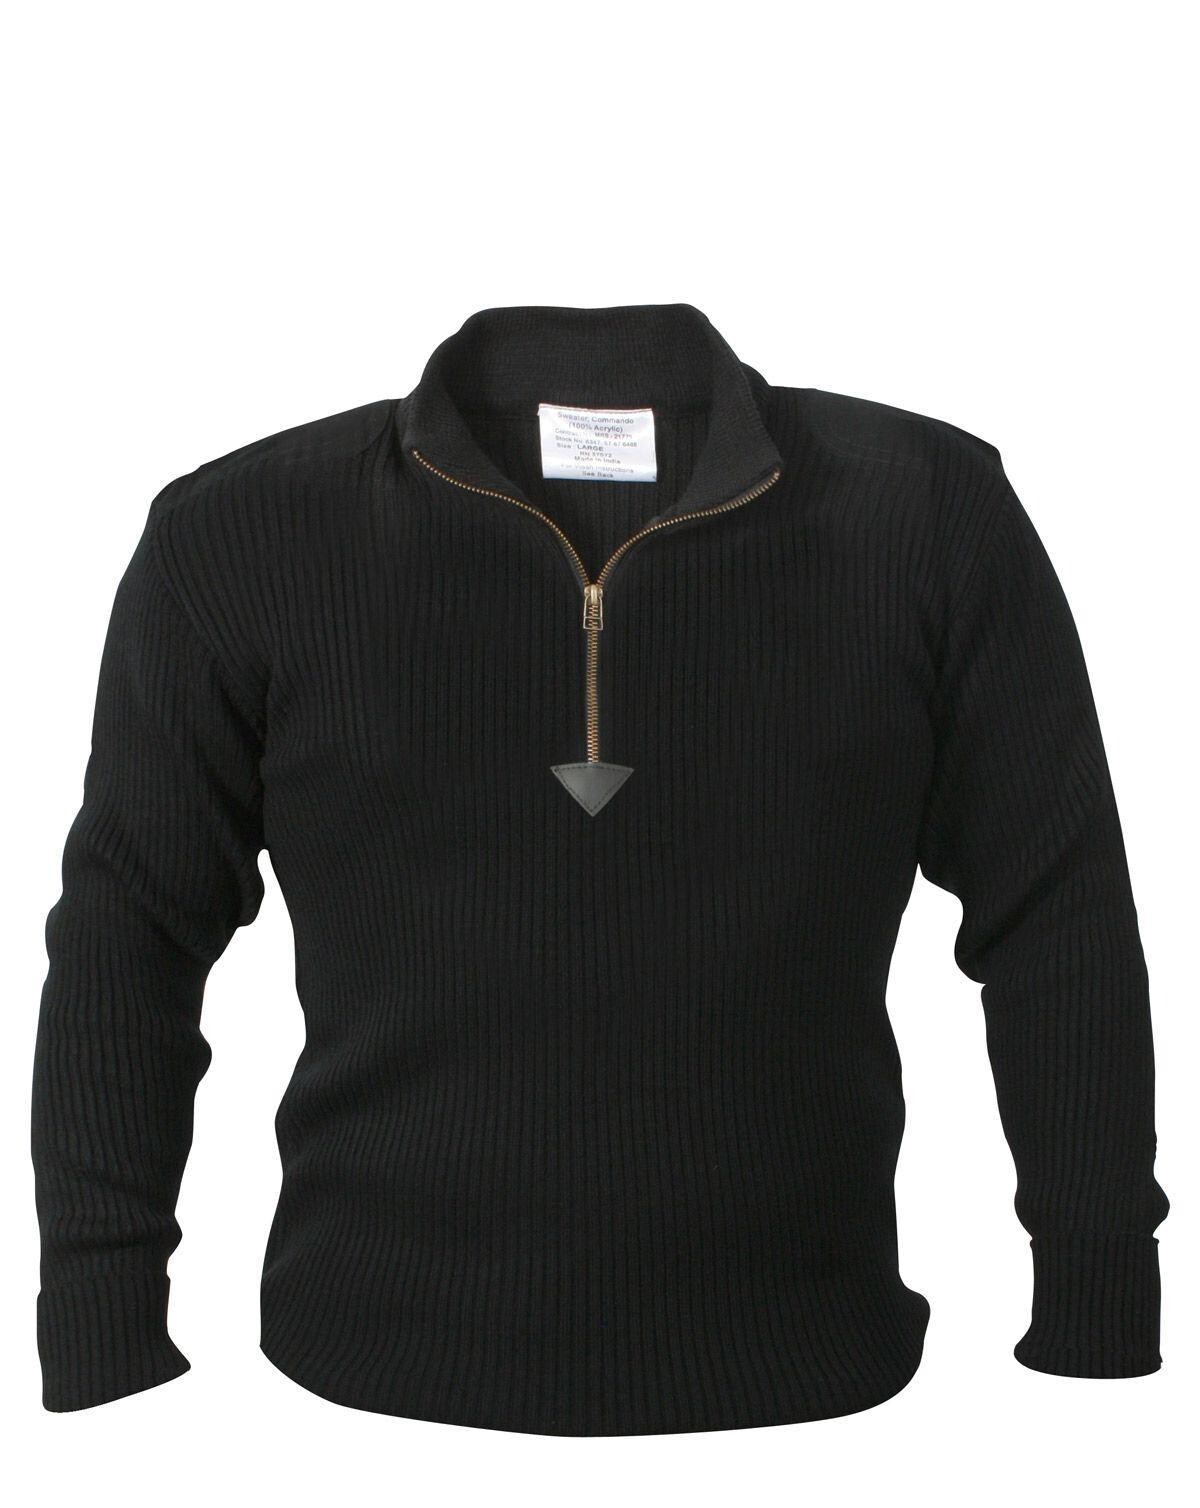 #2 - Rothco Commando Sweater (Sort, M)